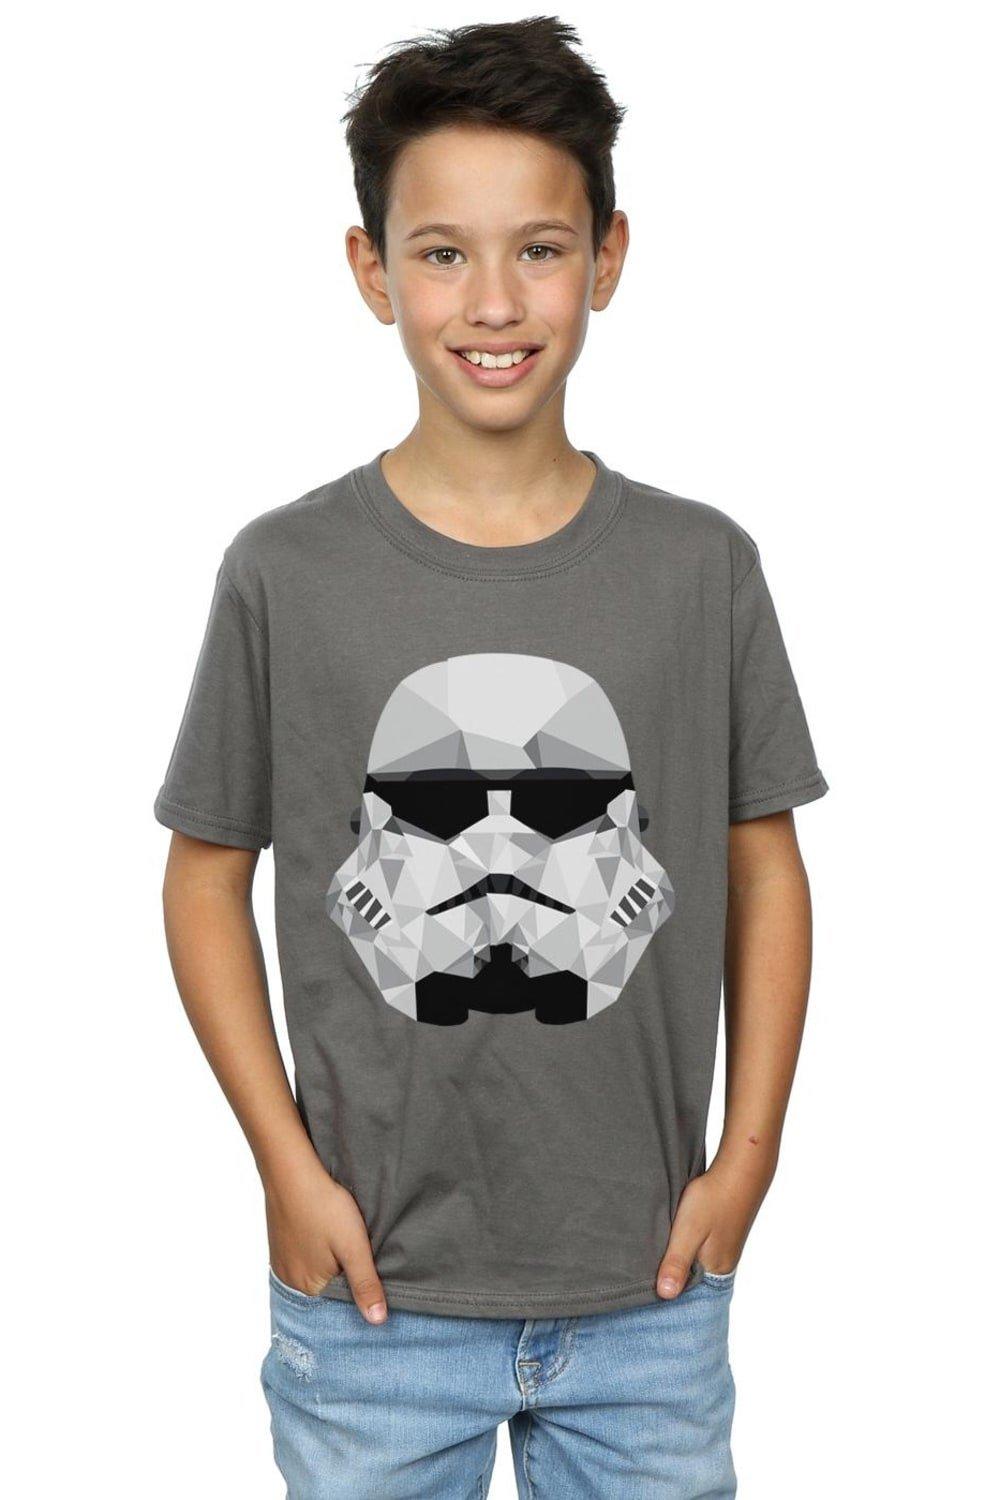 Stormtrooper Geometric Helmet T-Shirt